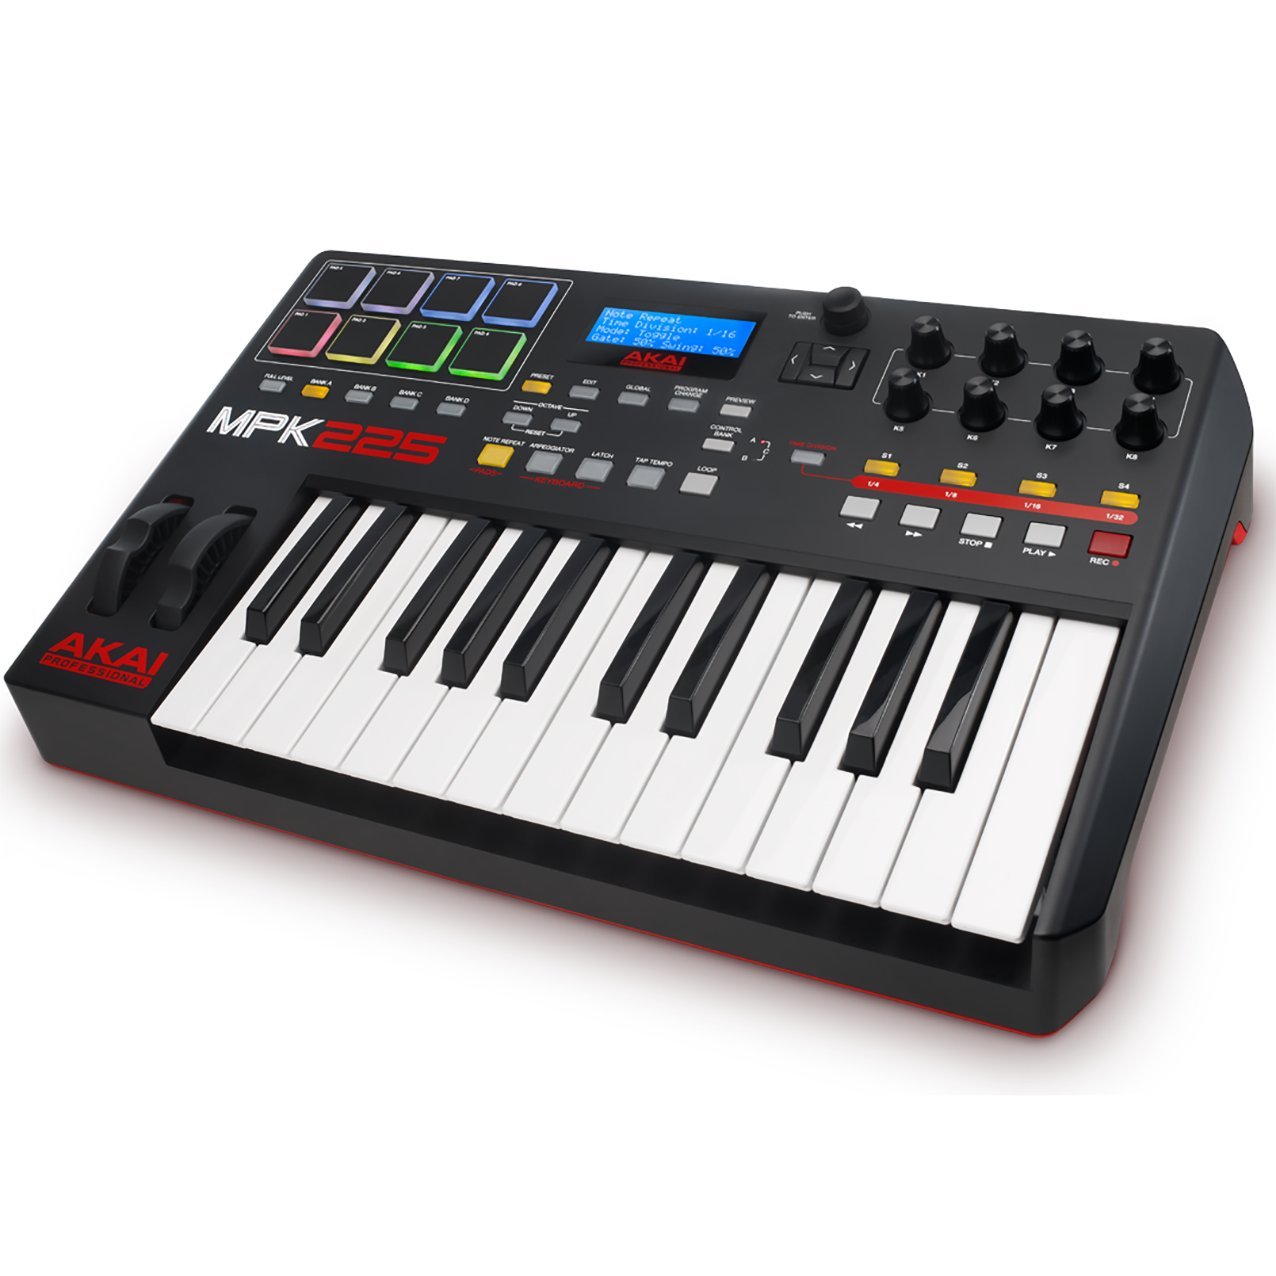 Akai Professional MPK225 - USB MIDI Keyboard Controller with 25 Semi Weighted Keys